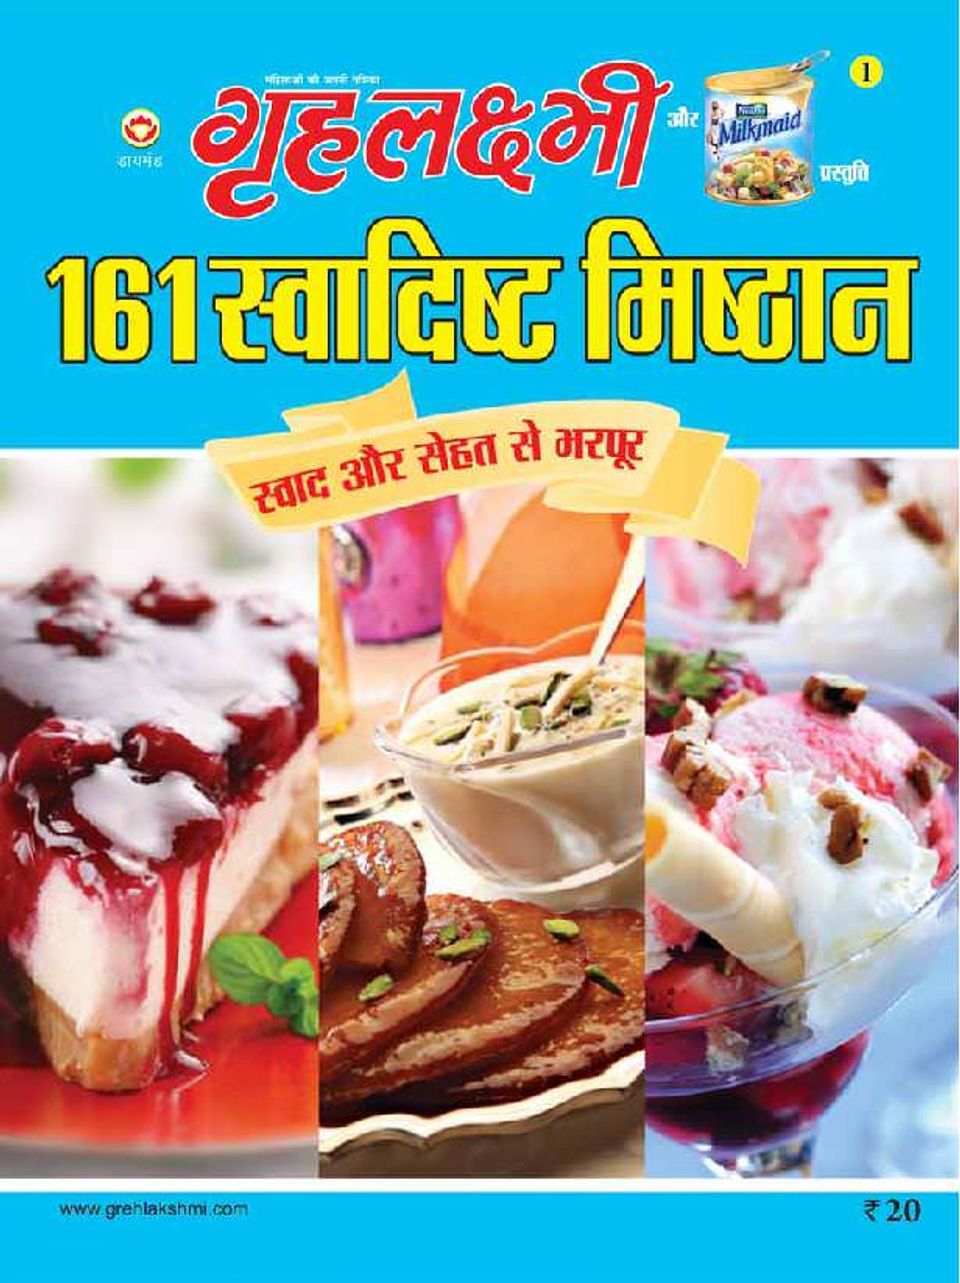 161 स्वादिष्ट मिष्ठान /161 Swadisht Mishthan Book PDF Download